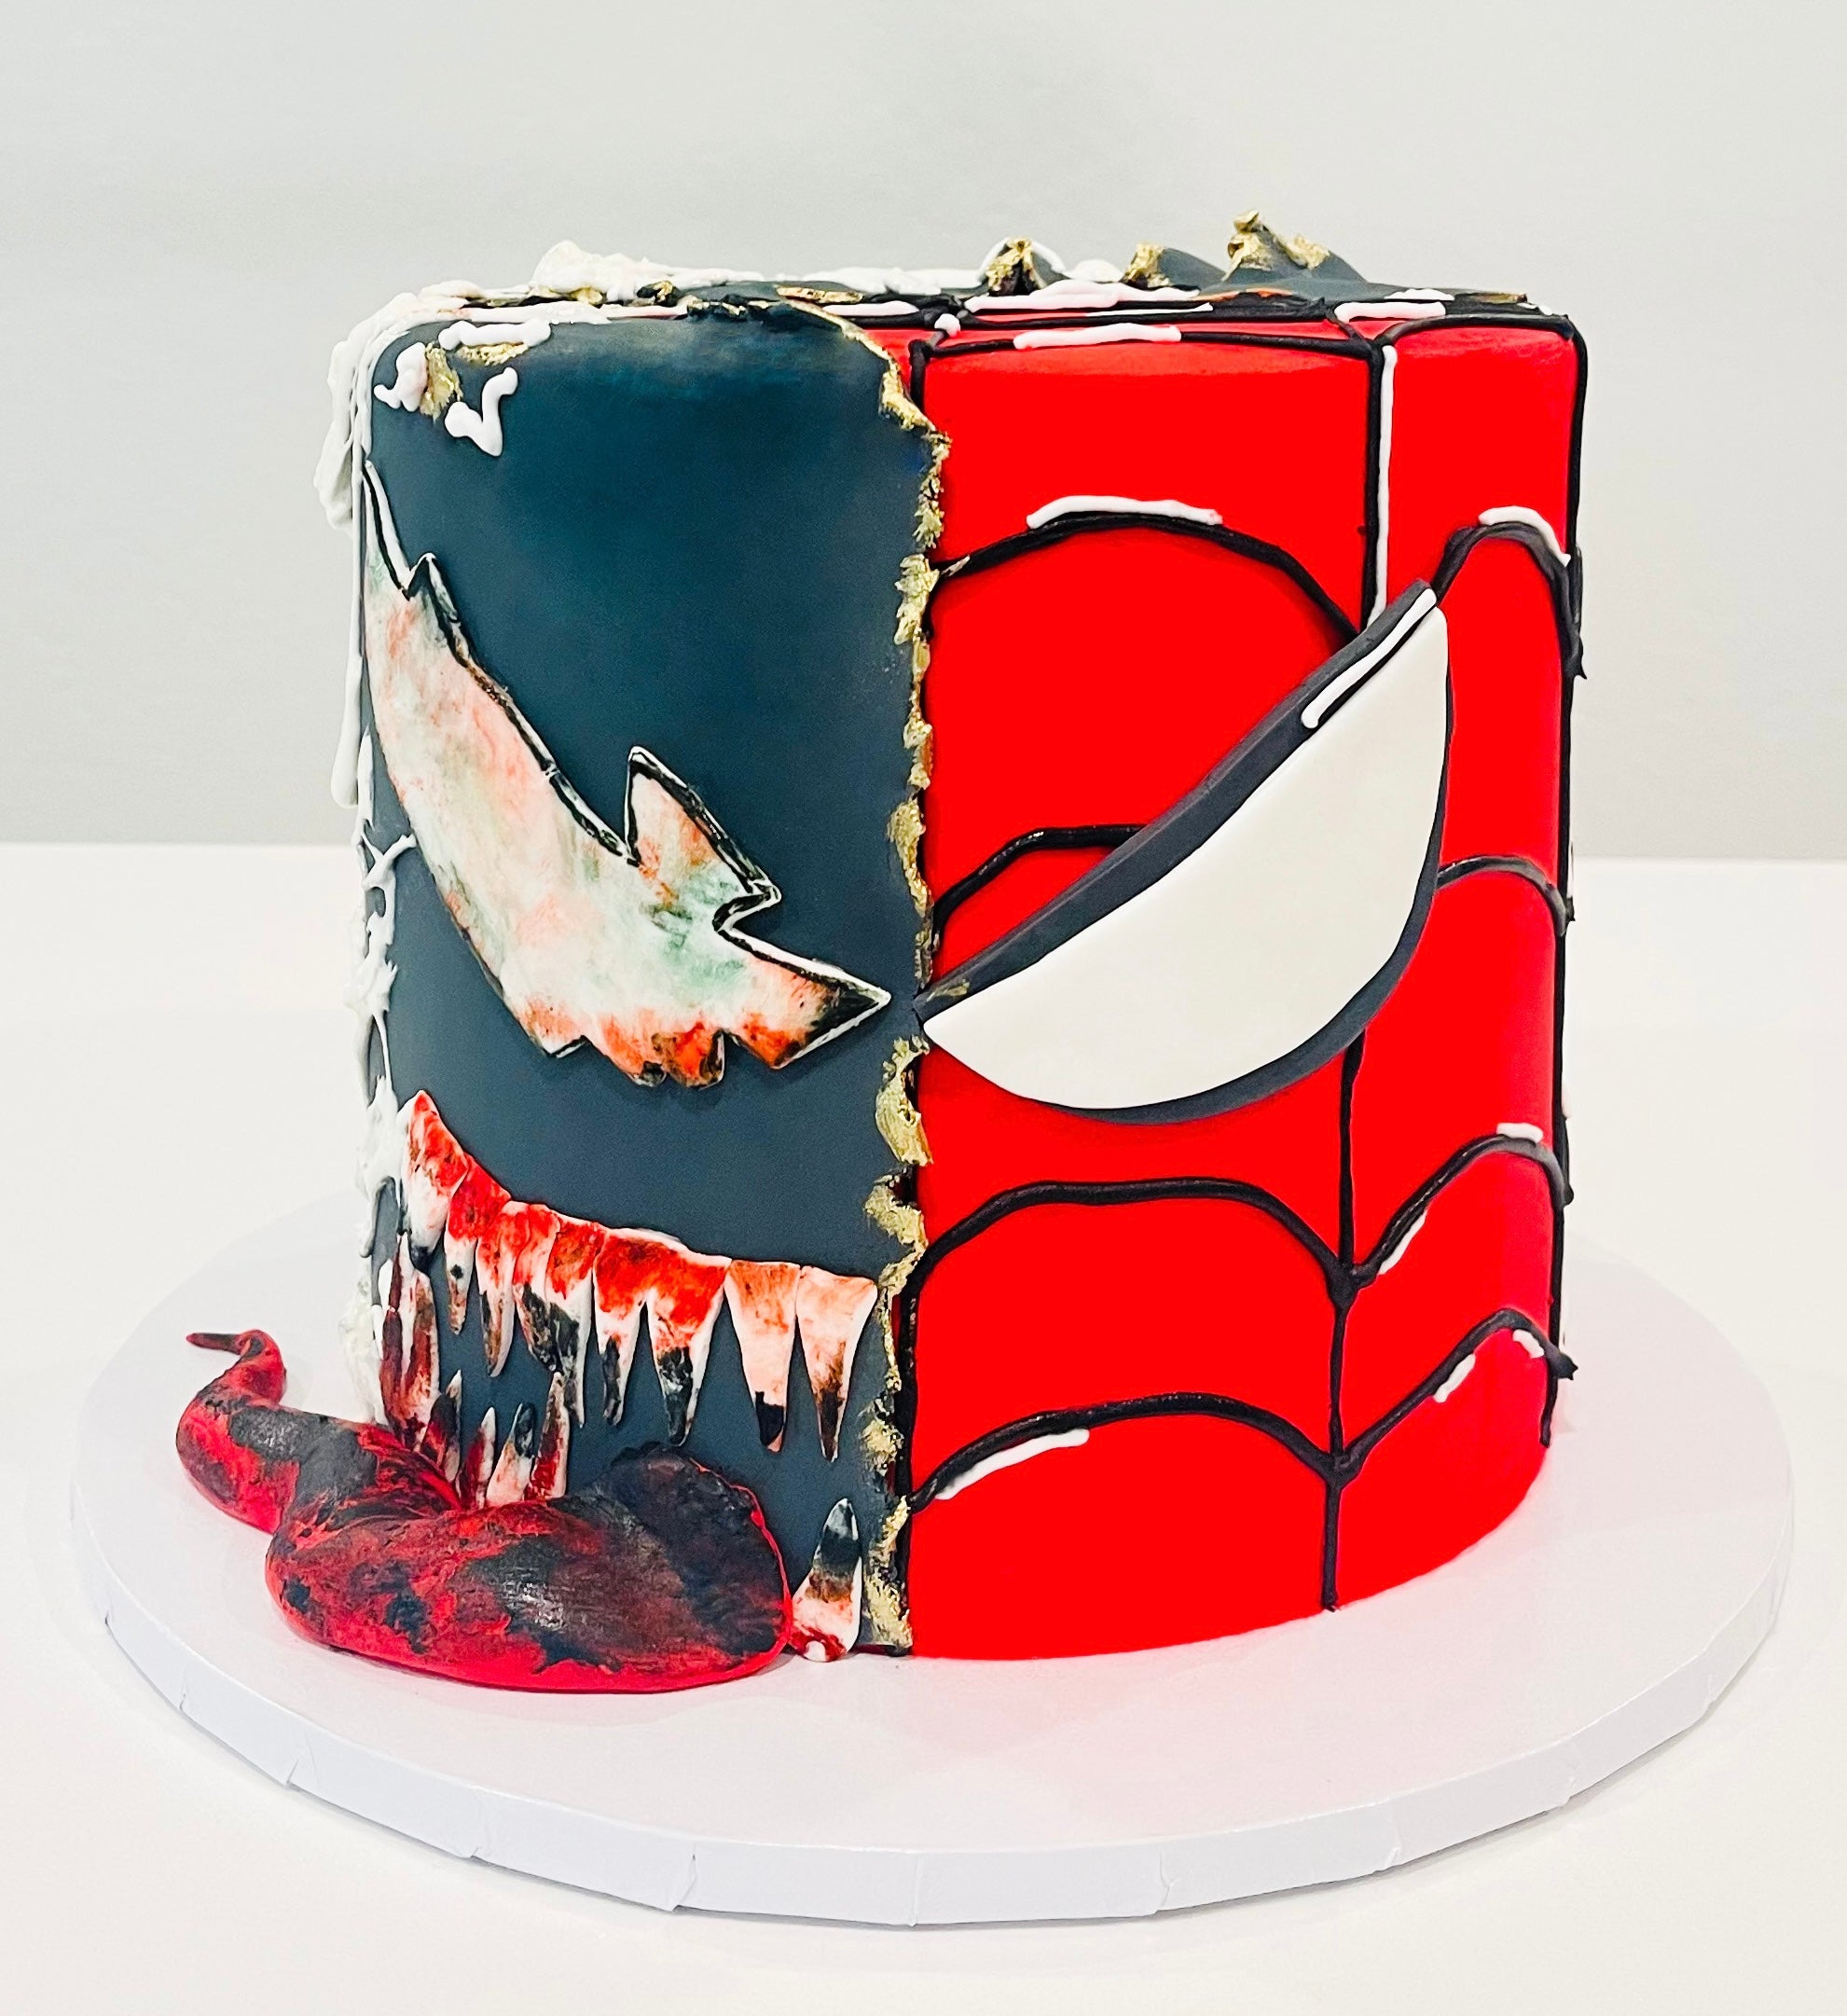 Mask of Spiderman Cake | Order Mask of Spiderman Cake online |Tfcakes